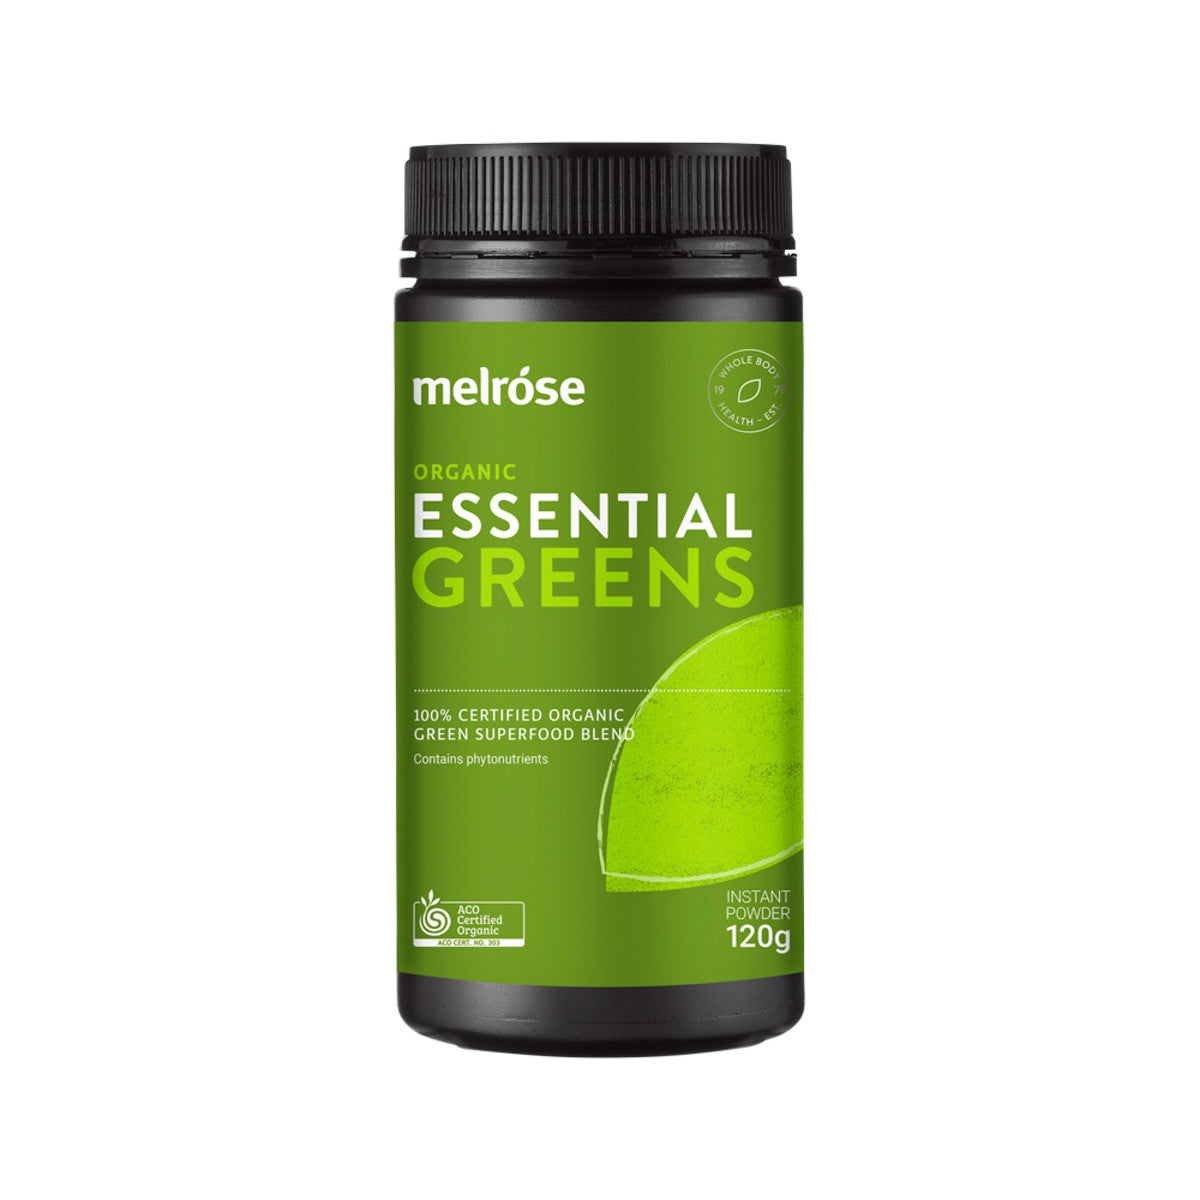 Melrose Organic Essential Greens Powder 120g-The Living Co.